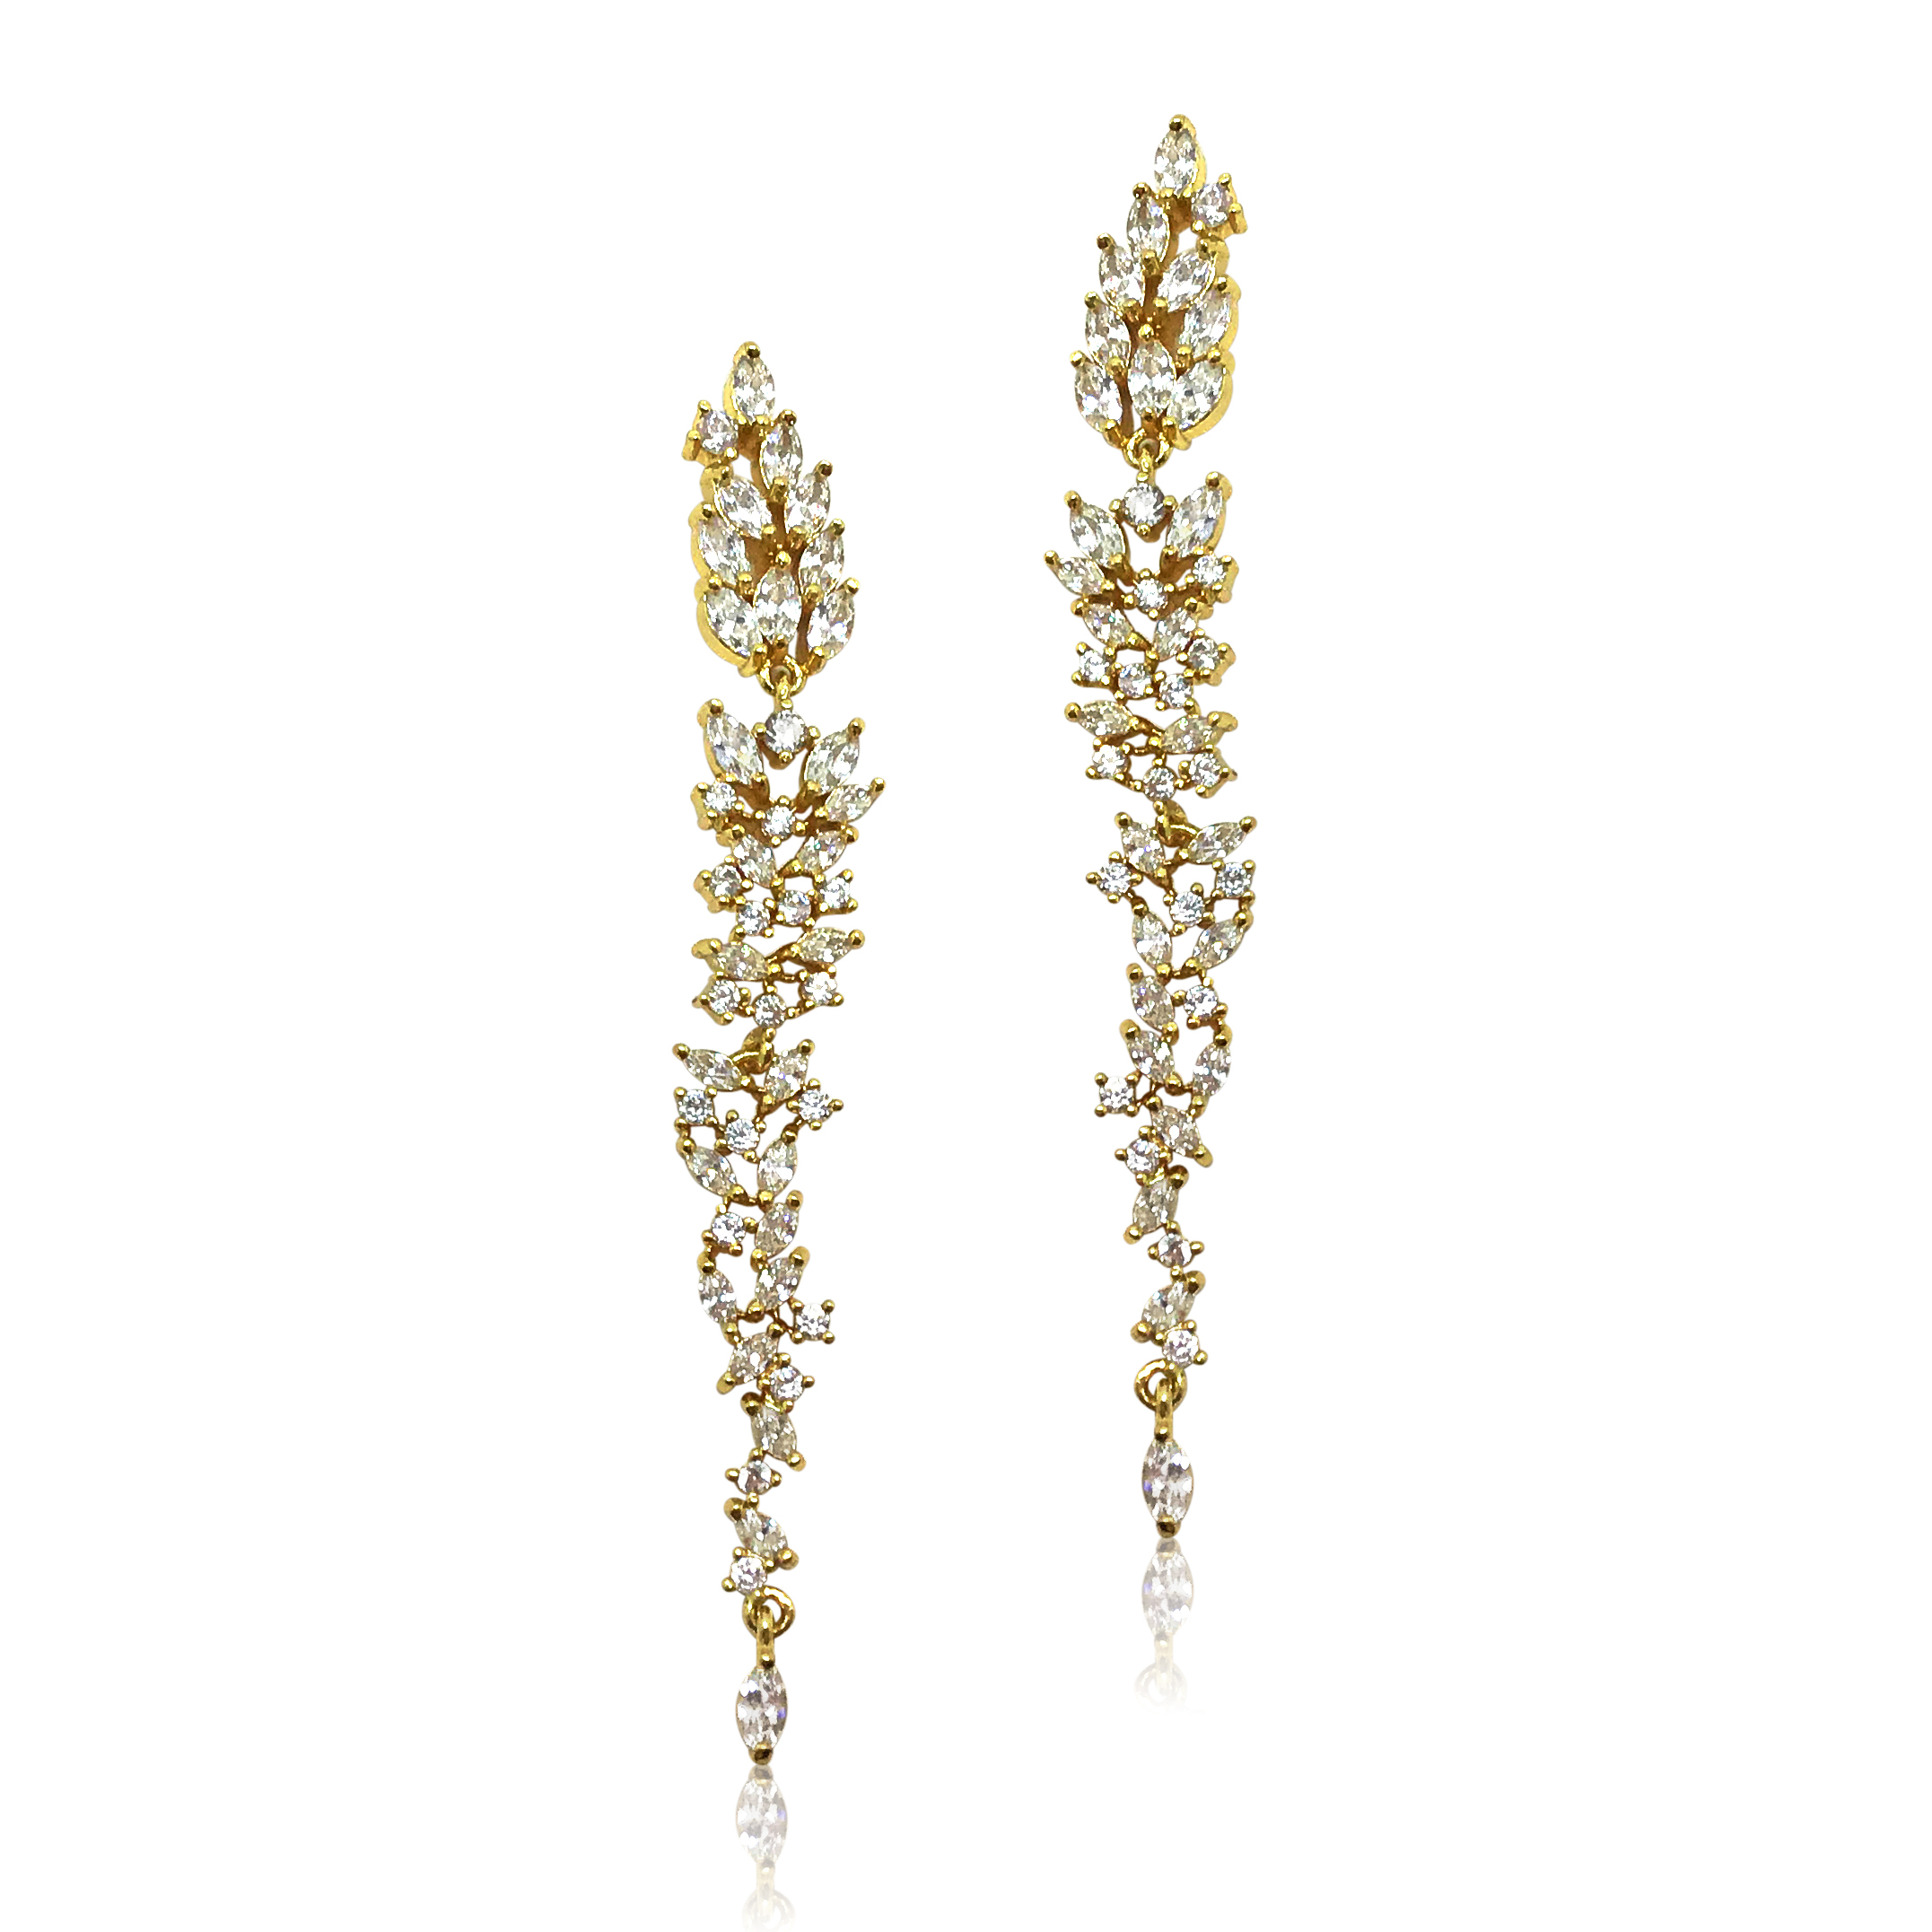 Gold Dangle Earrings|Kimberly|Jeanette Maree|Shop Online